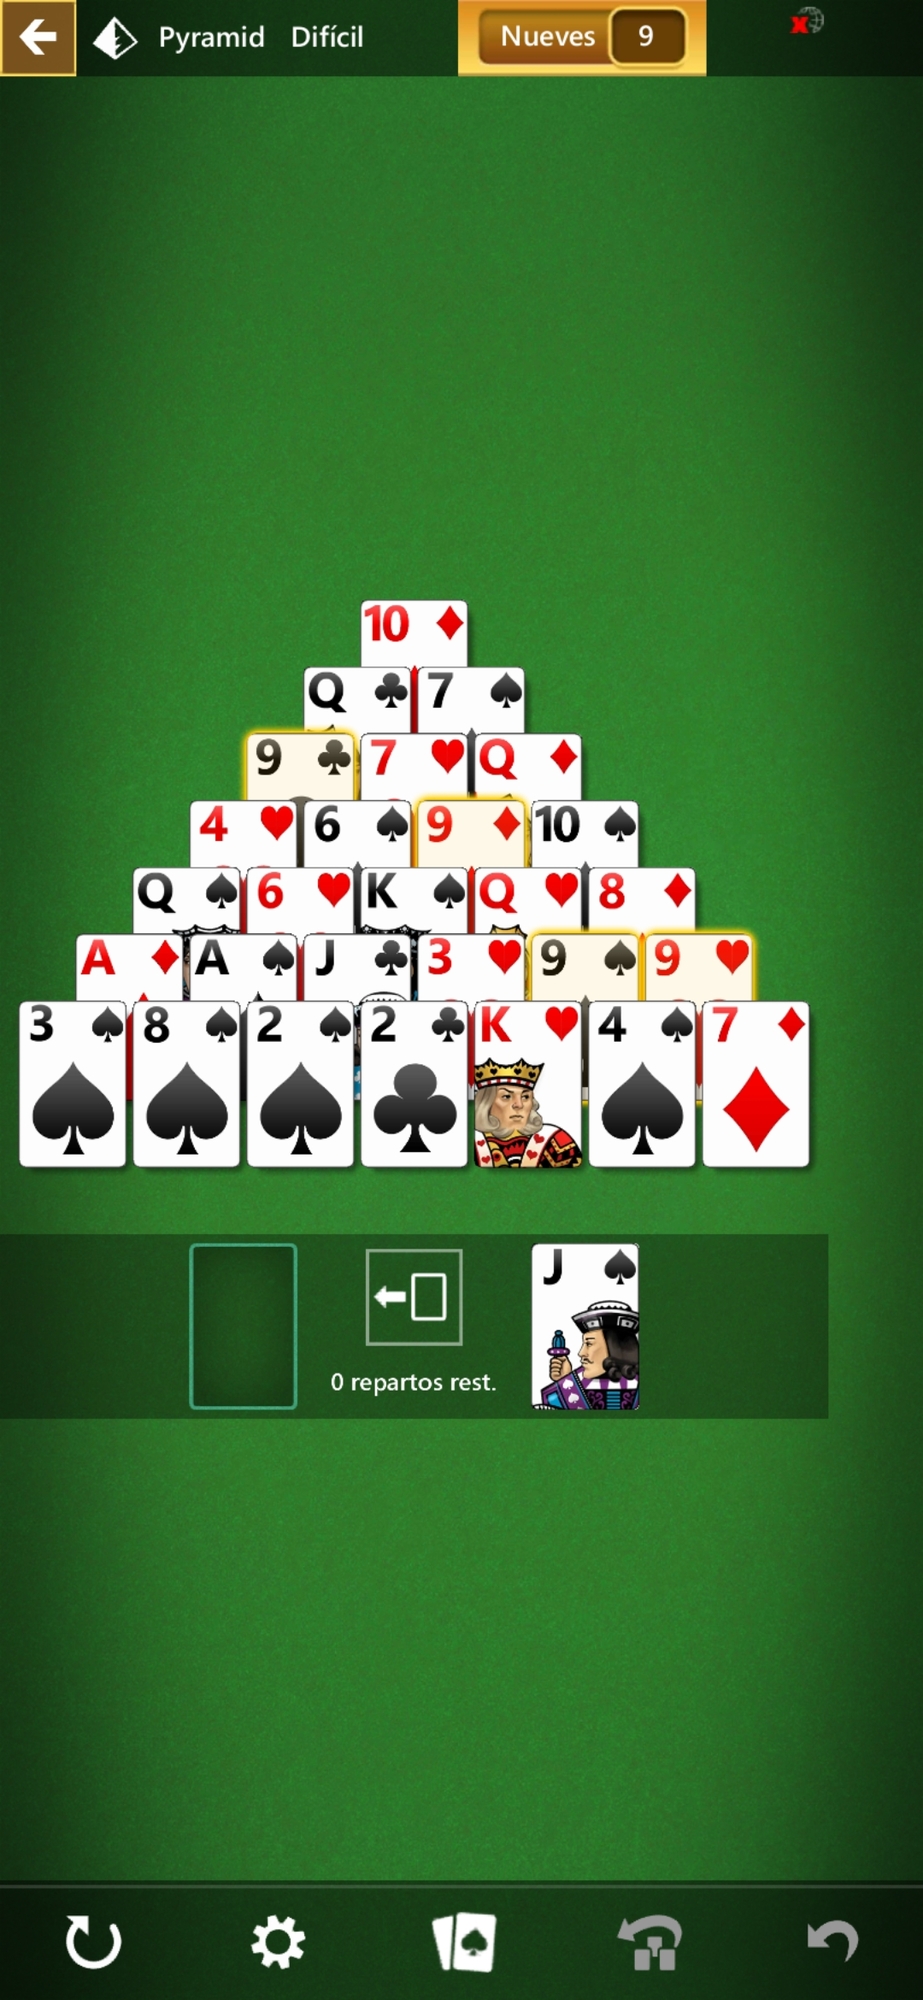 Pyramid game impossible to win 95bbf045-b573-4699-8597-3daf3202c293?upload=true.jpg